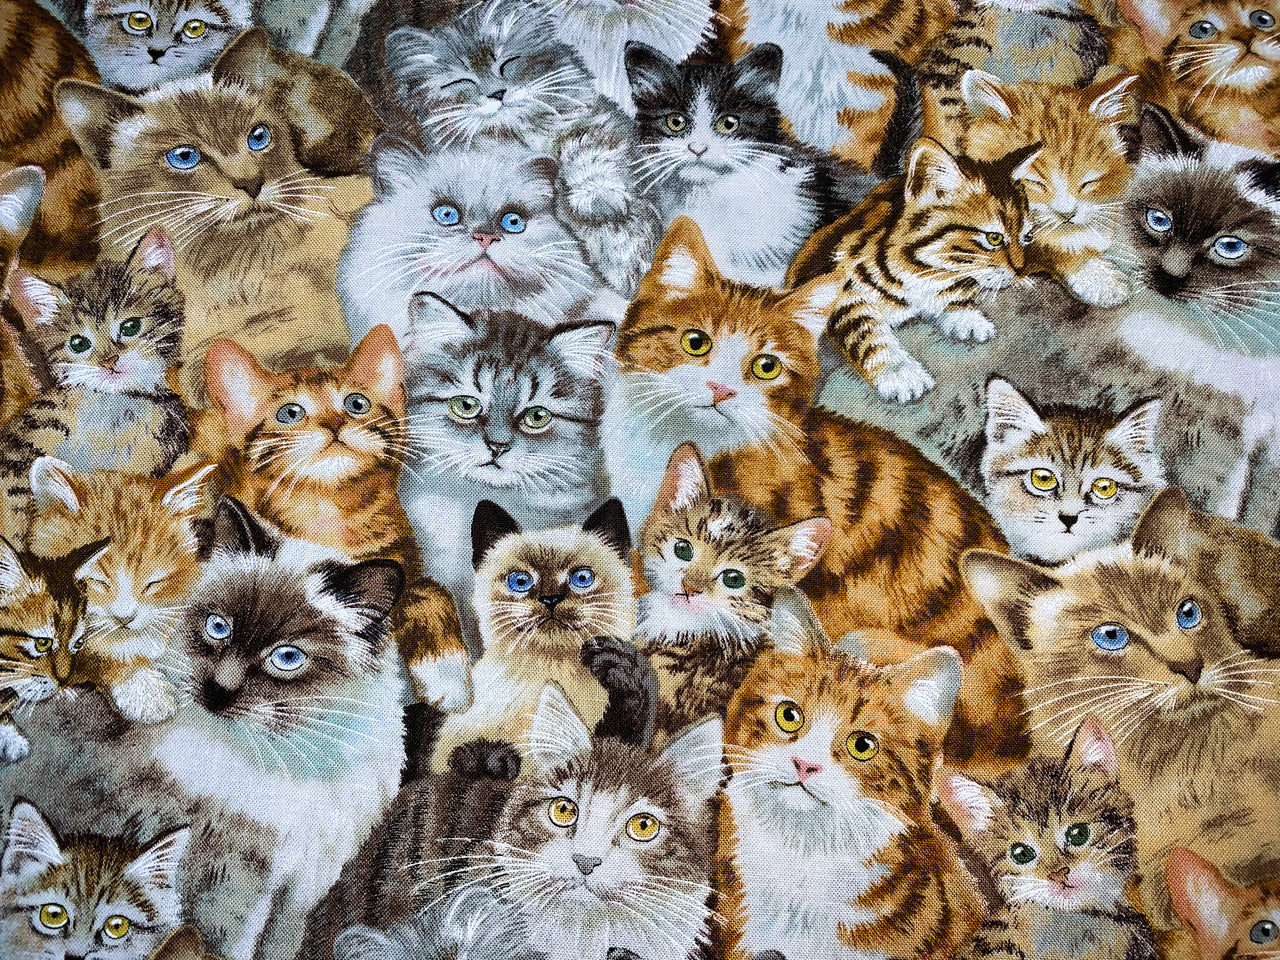 Petpourri Cat fabric 1253 packed cats cotton fabric